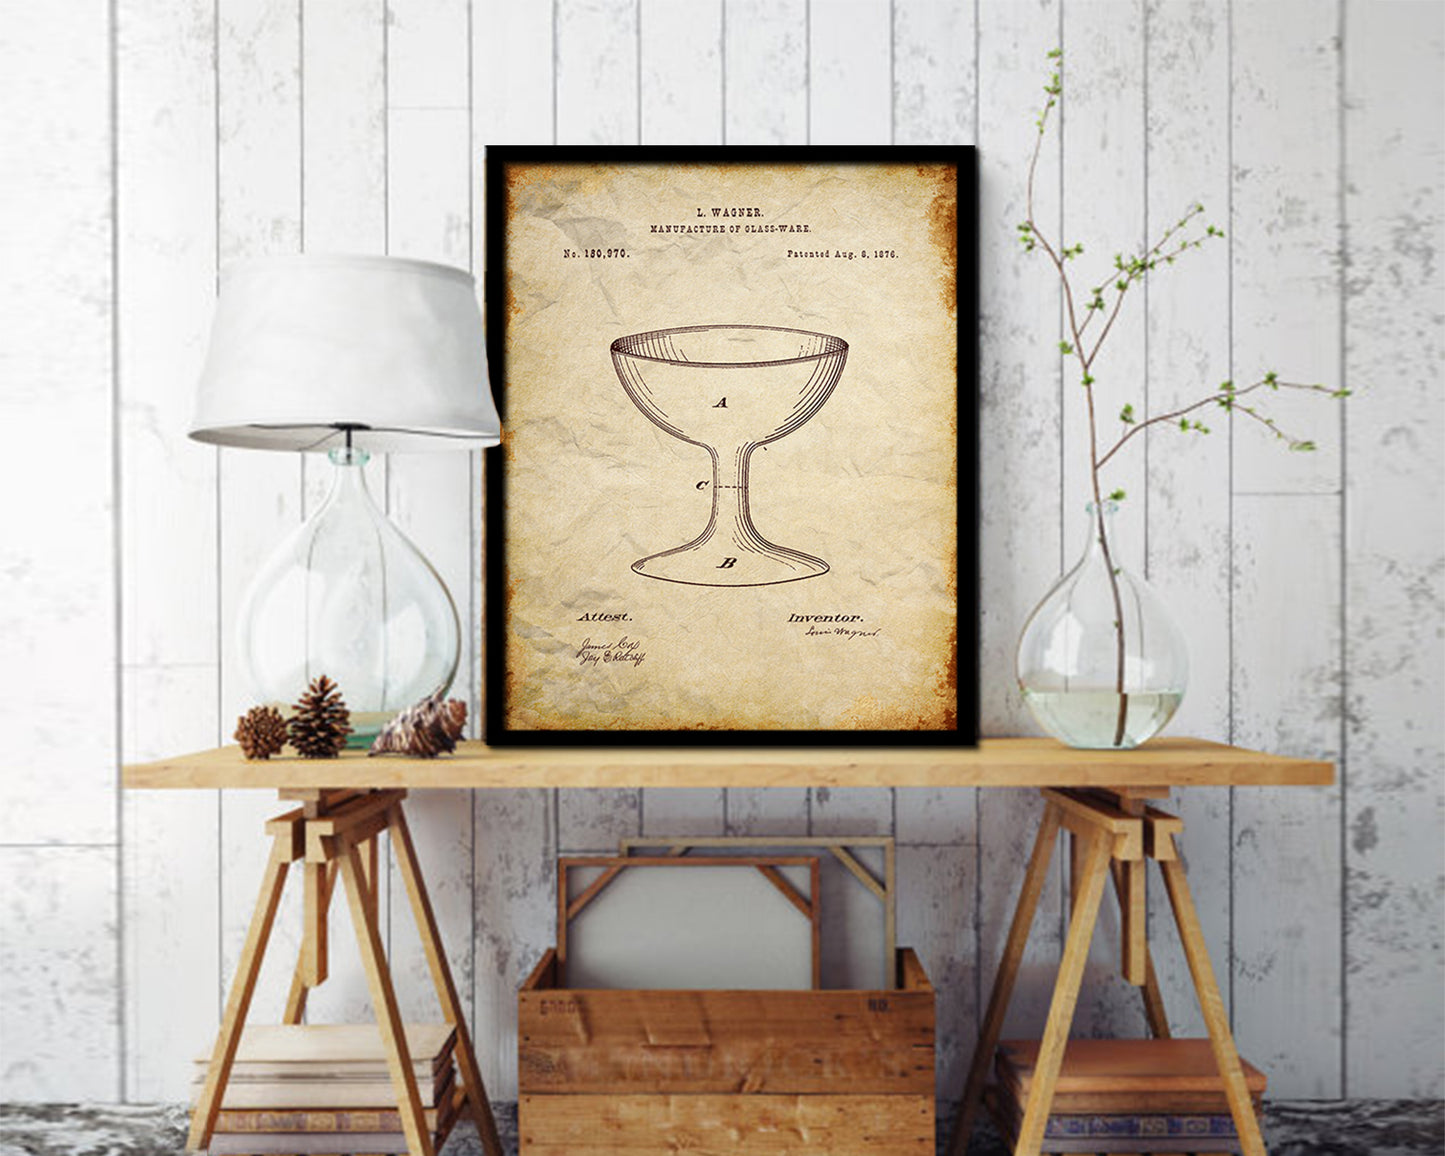 Manufacture of Glassware Wine Vintage Patent Artwork Walnut Frame Gifts